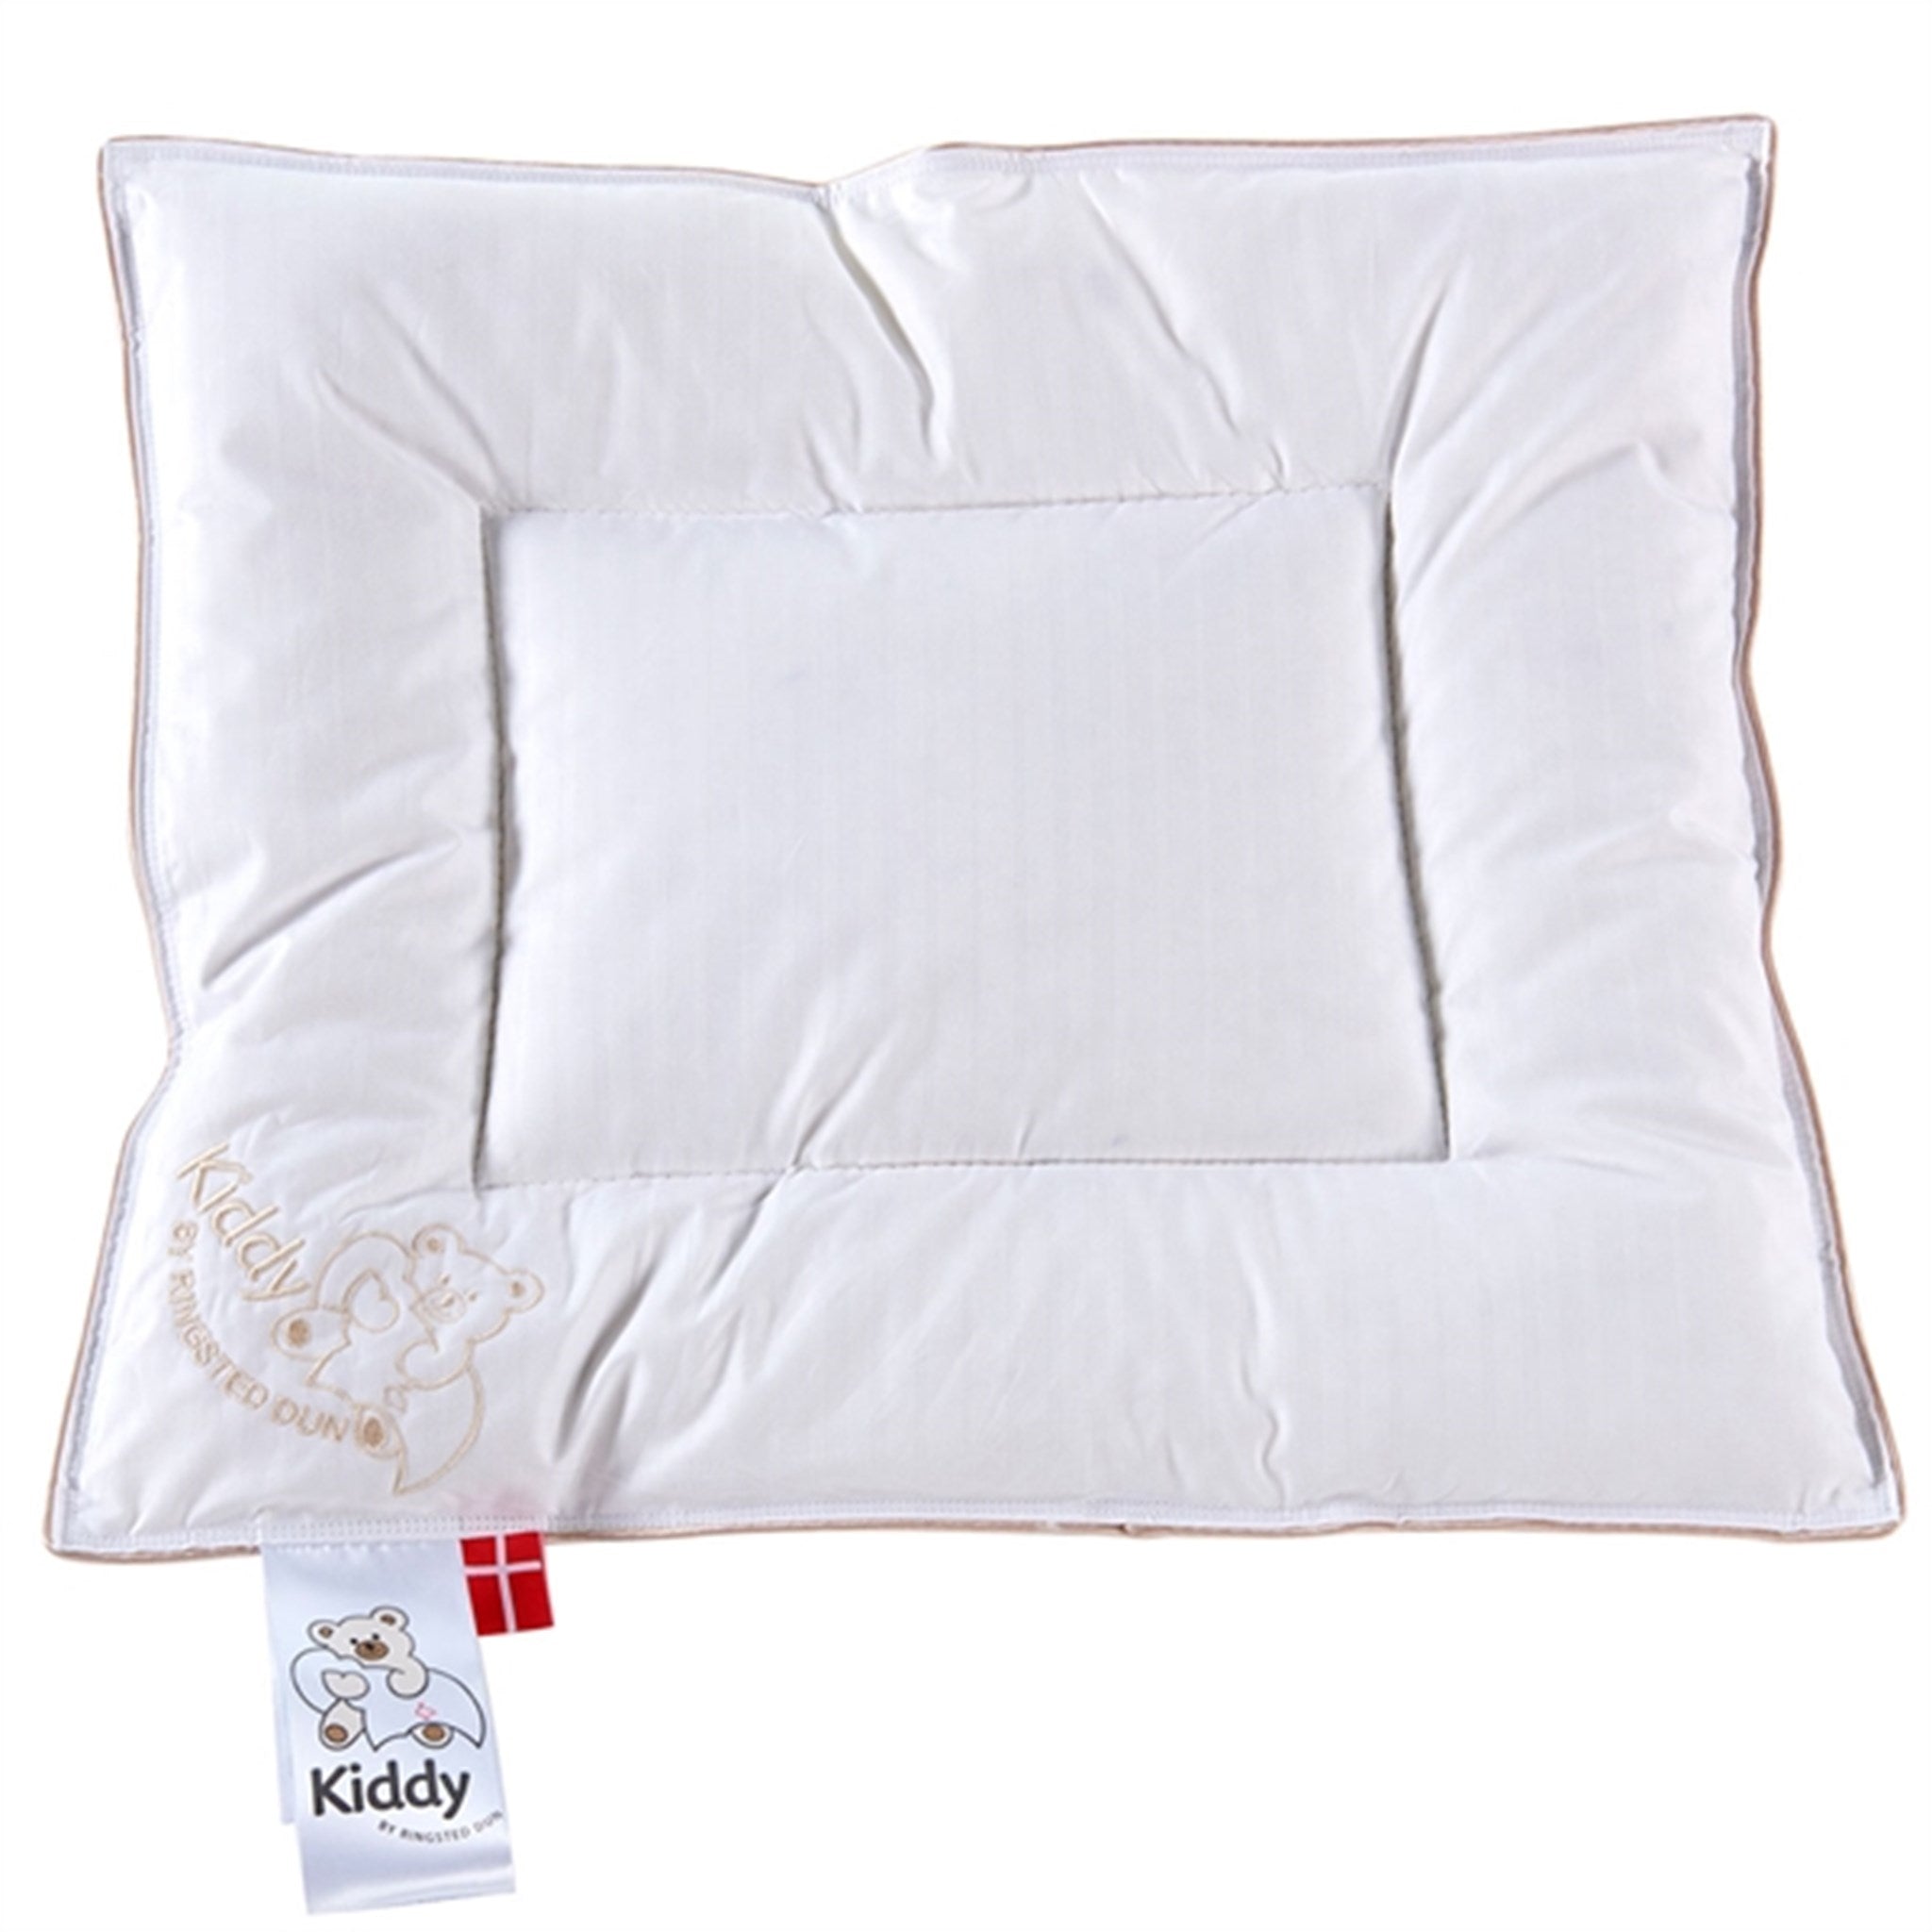 RINGSTED DUN Kiddy Royal Musk Baby Pillow